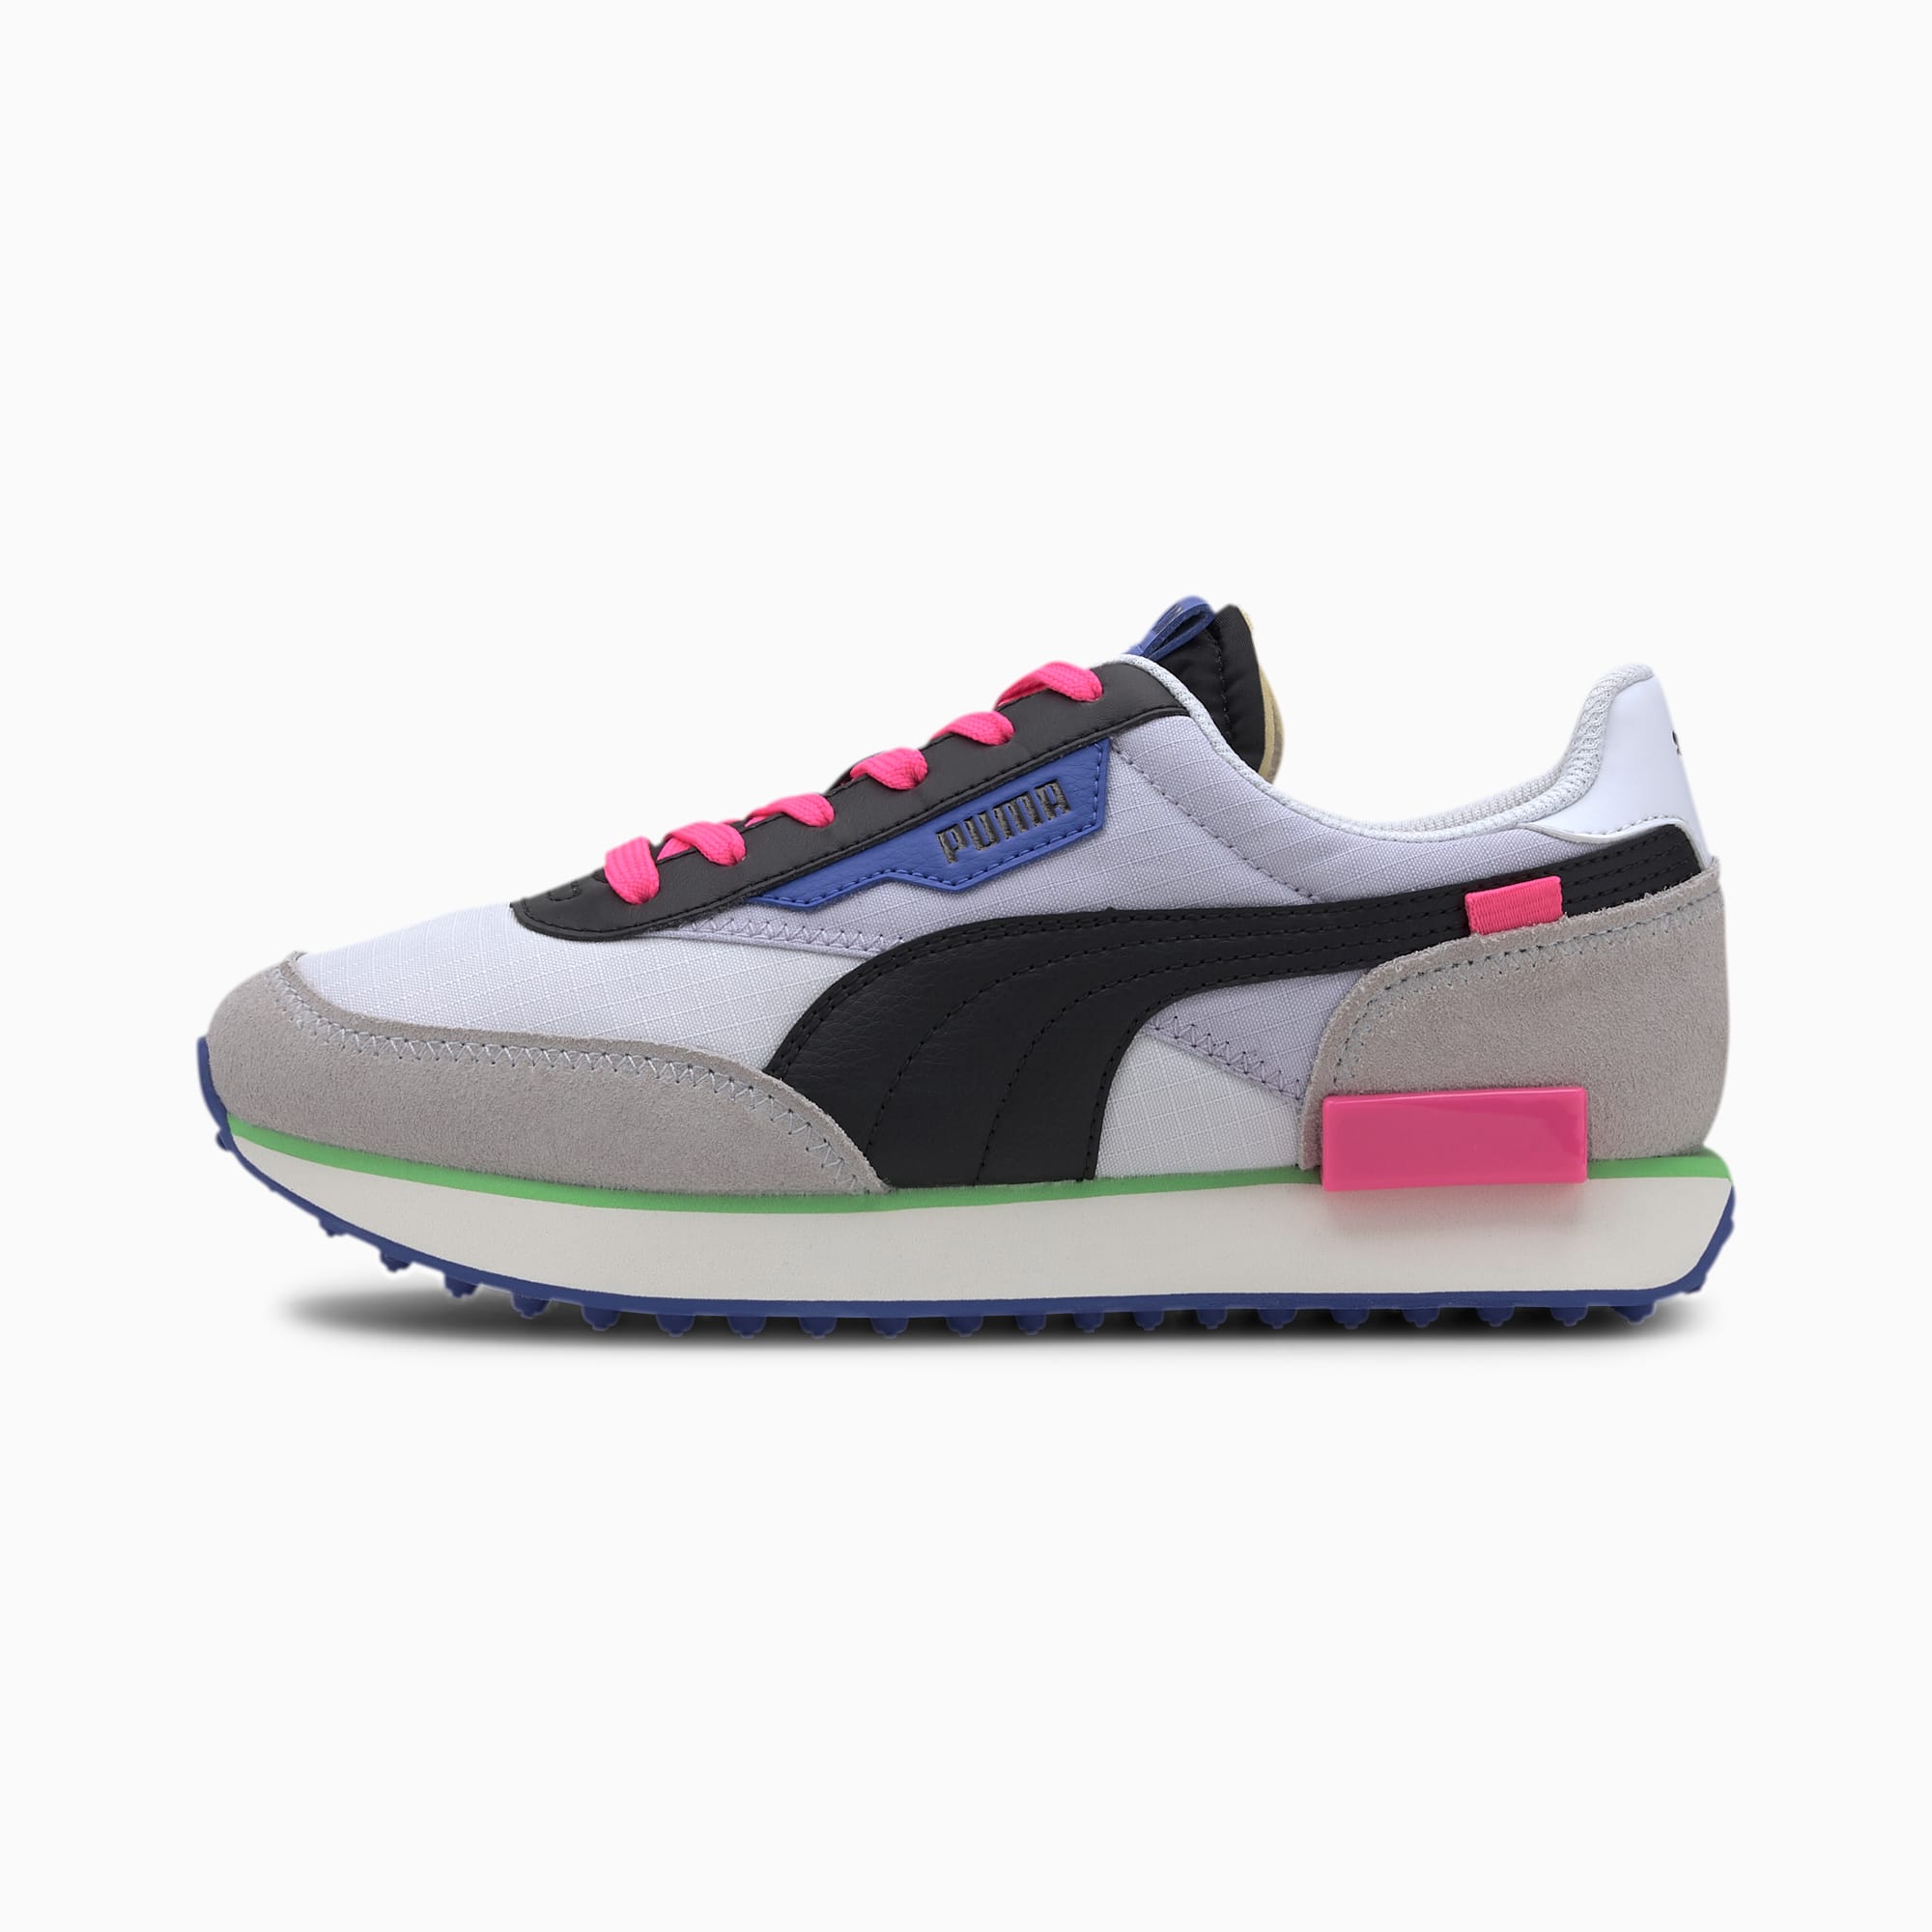 puma sneakers womens pink